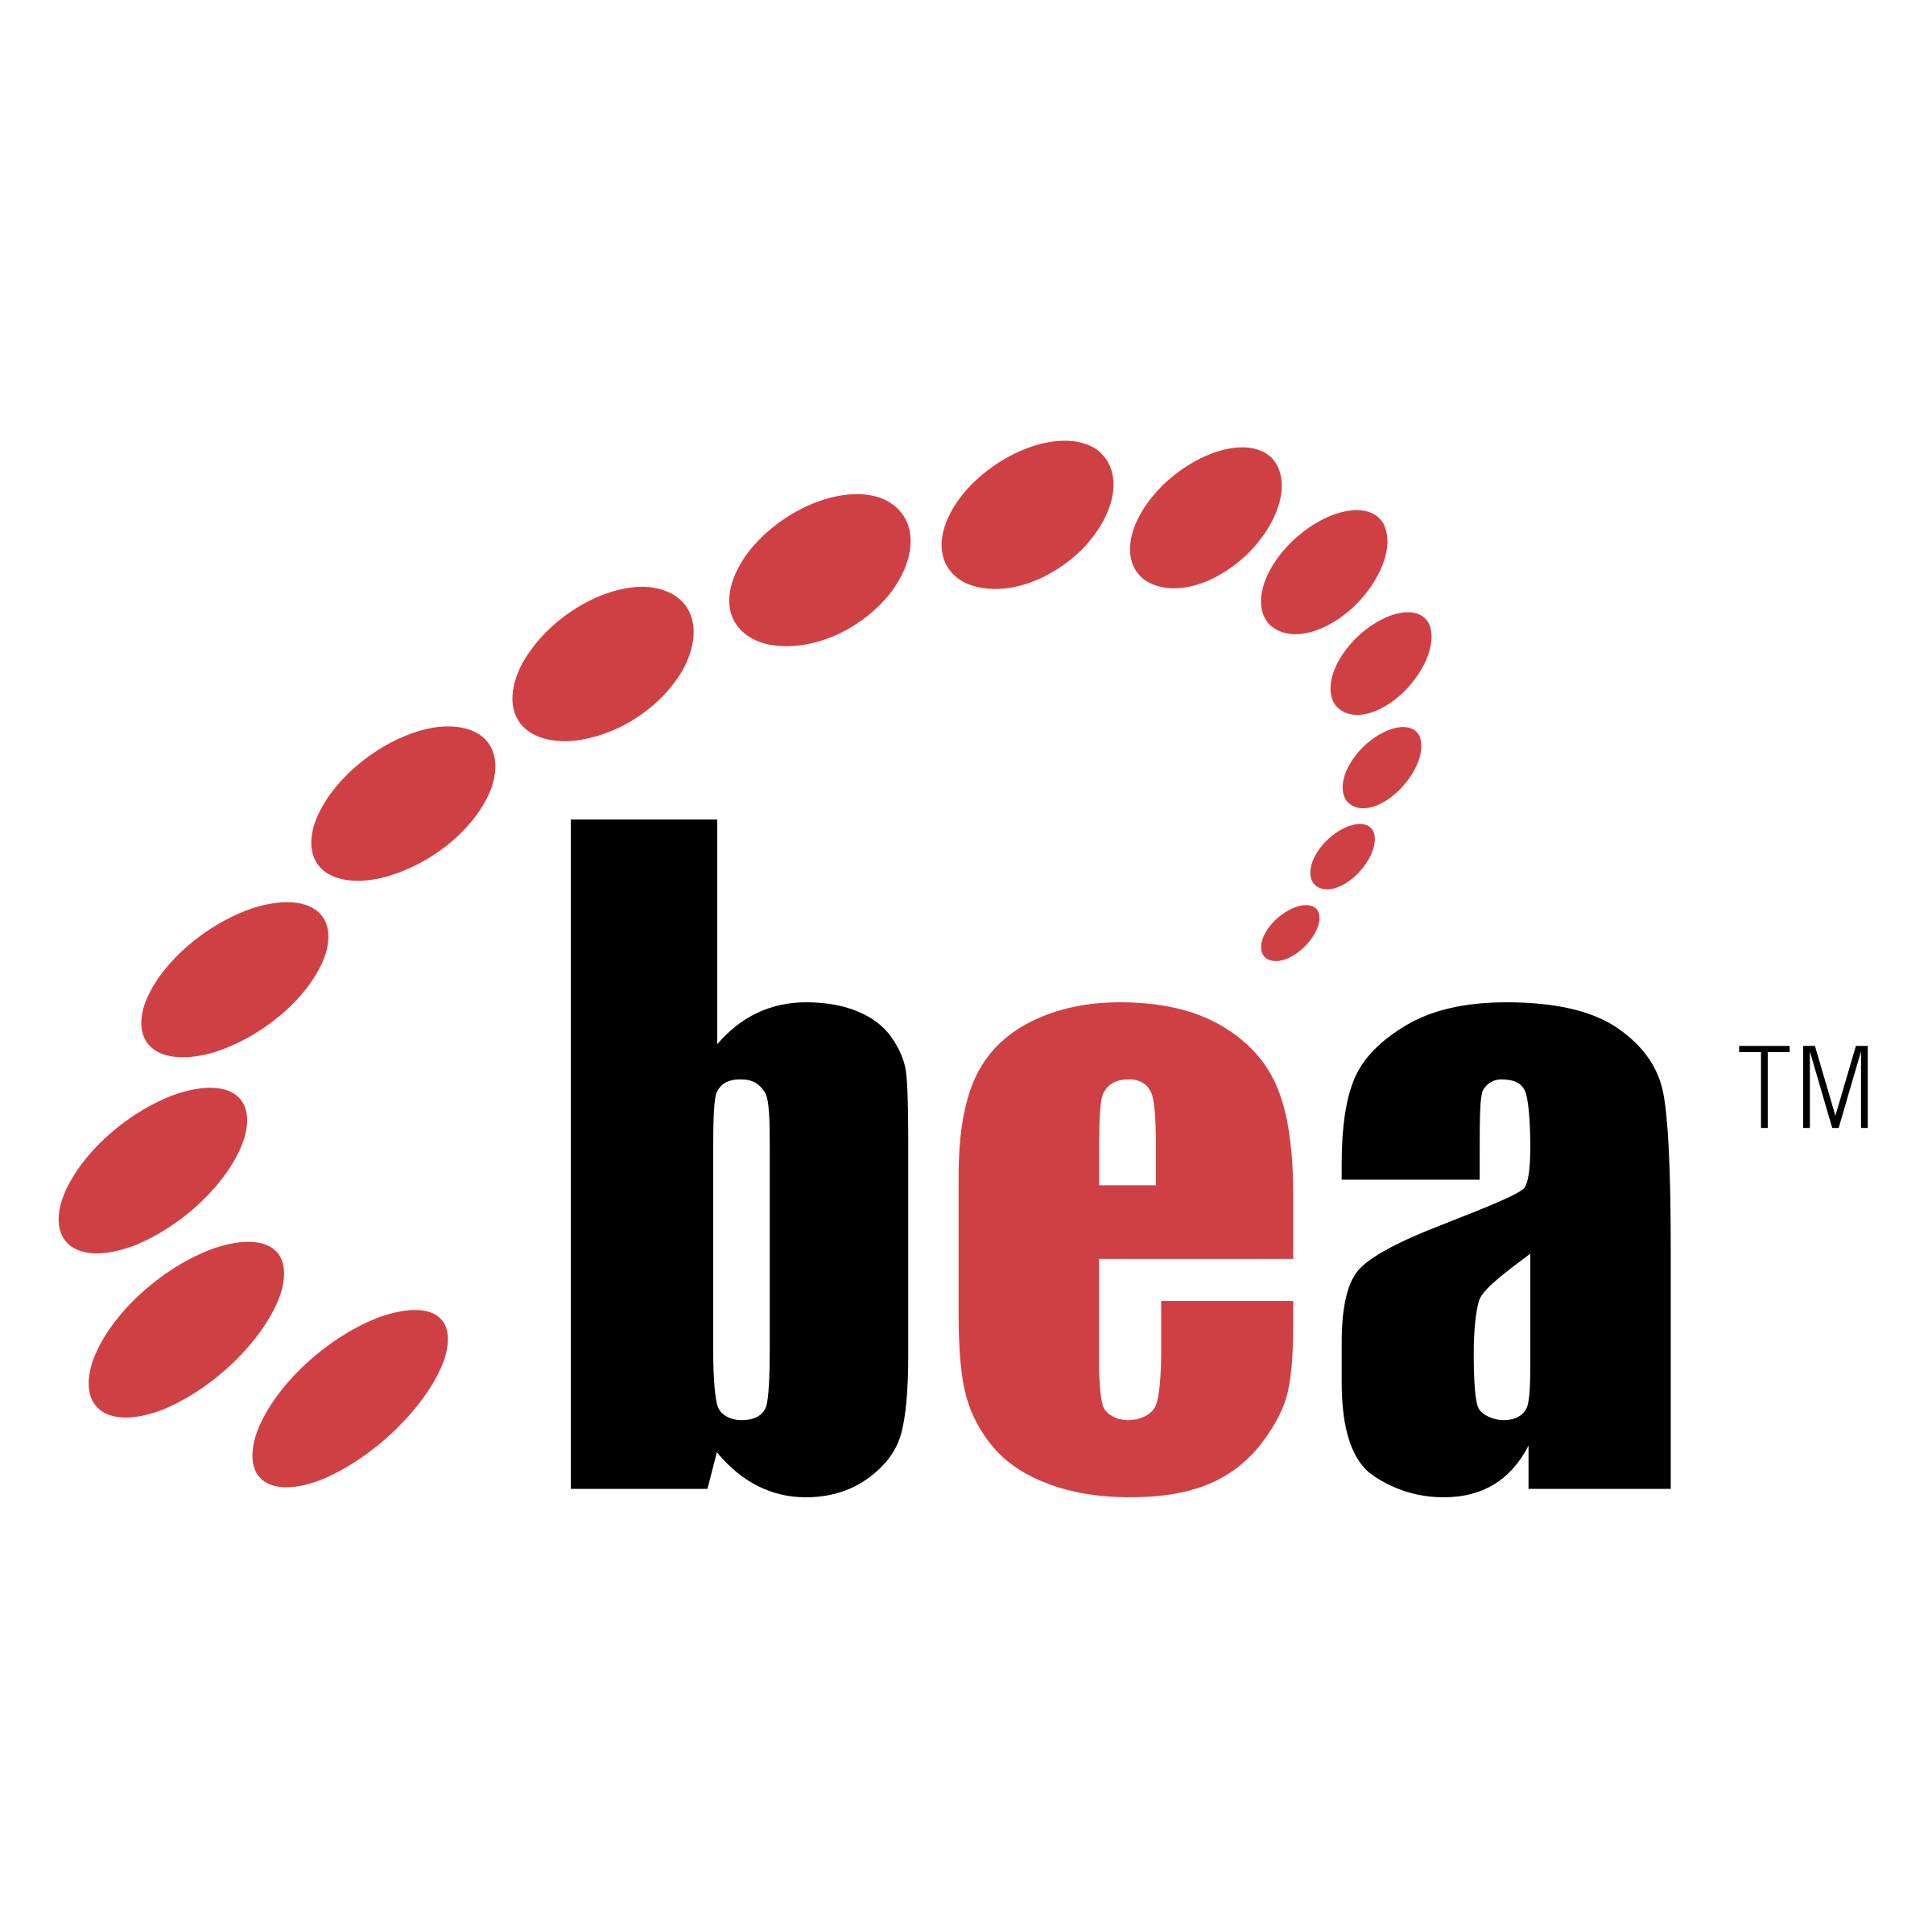 Bea Logo - BEA Logo PNG Transparent & SVG Vector - Freebie Supply